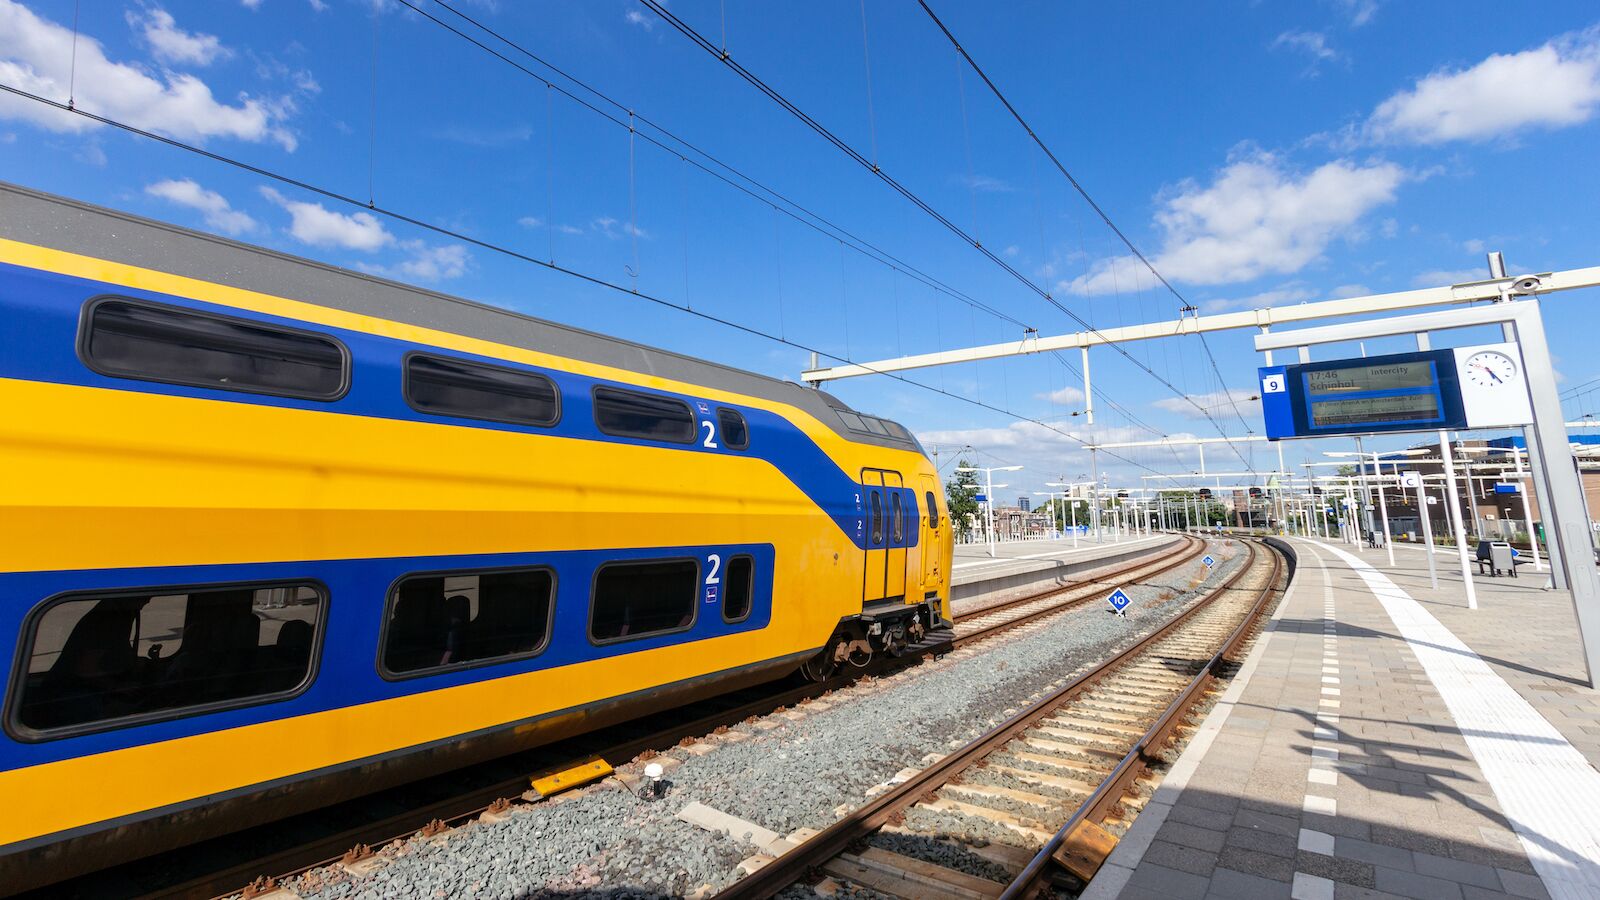 NS International InterCity train that runs between Amsterdam and Brussels